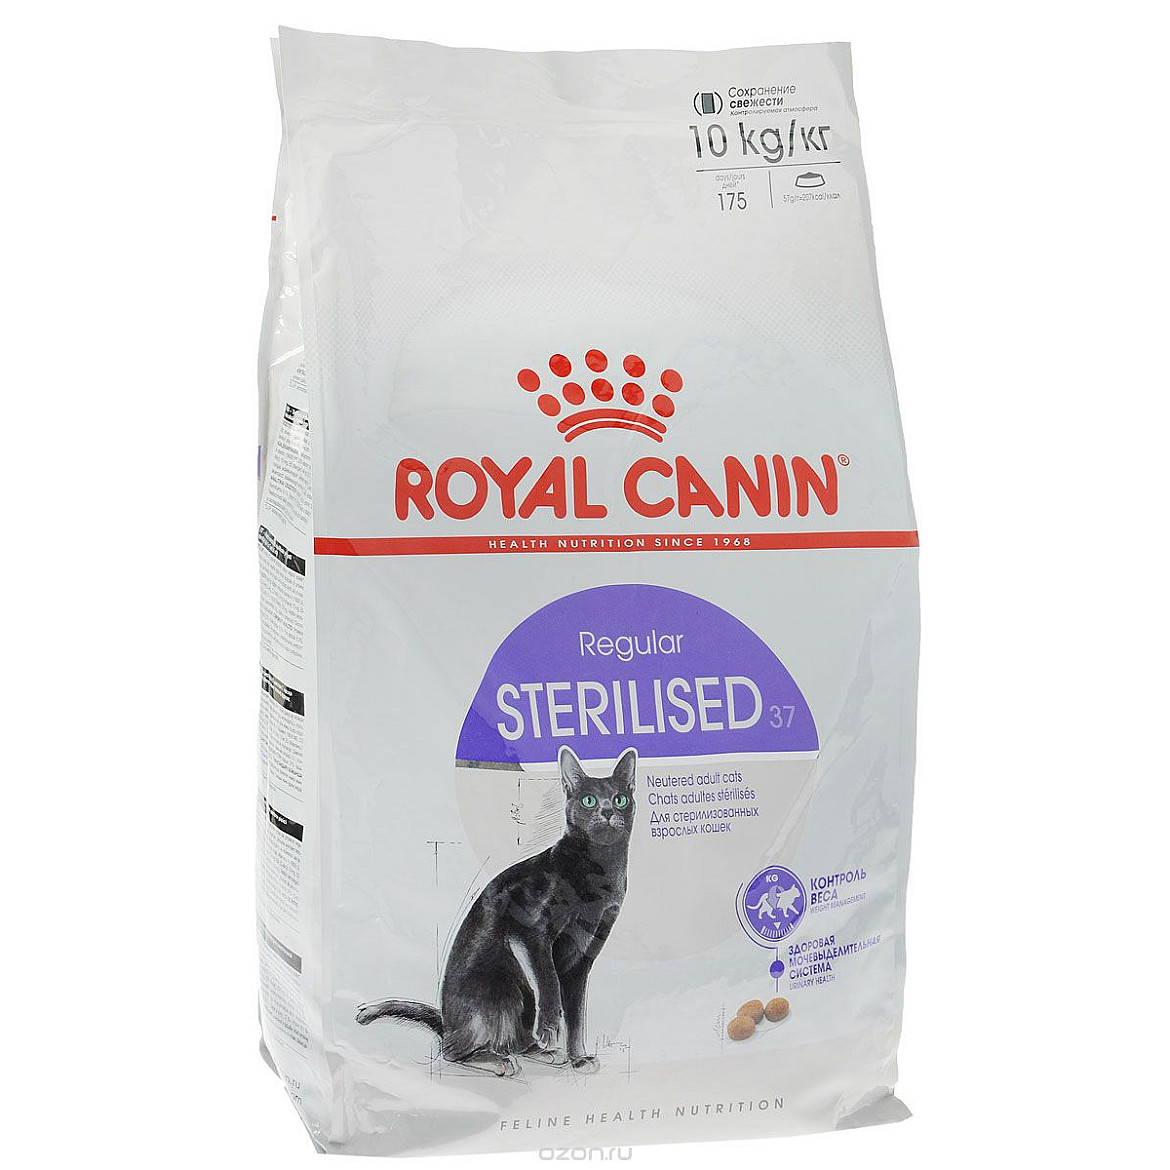 Royal Canin Sterilised Сухий корм для стерилізованих кішок, 10 кг